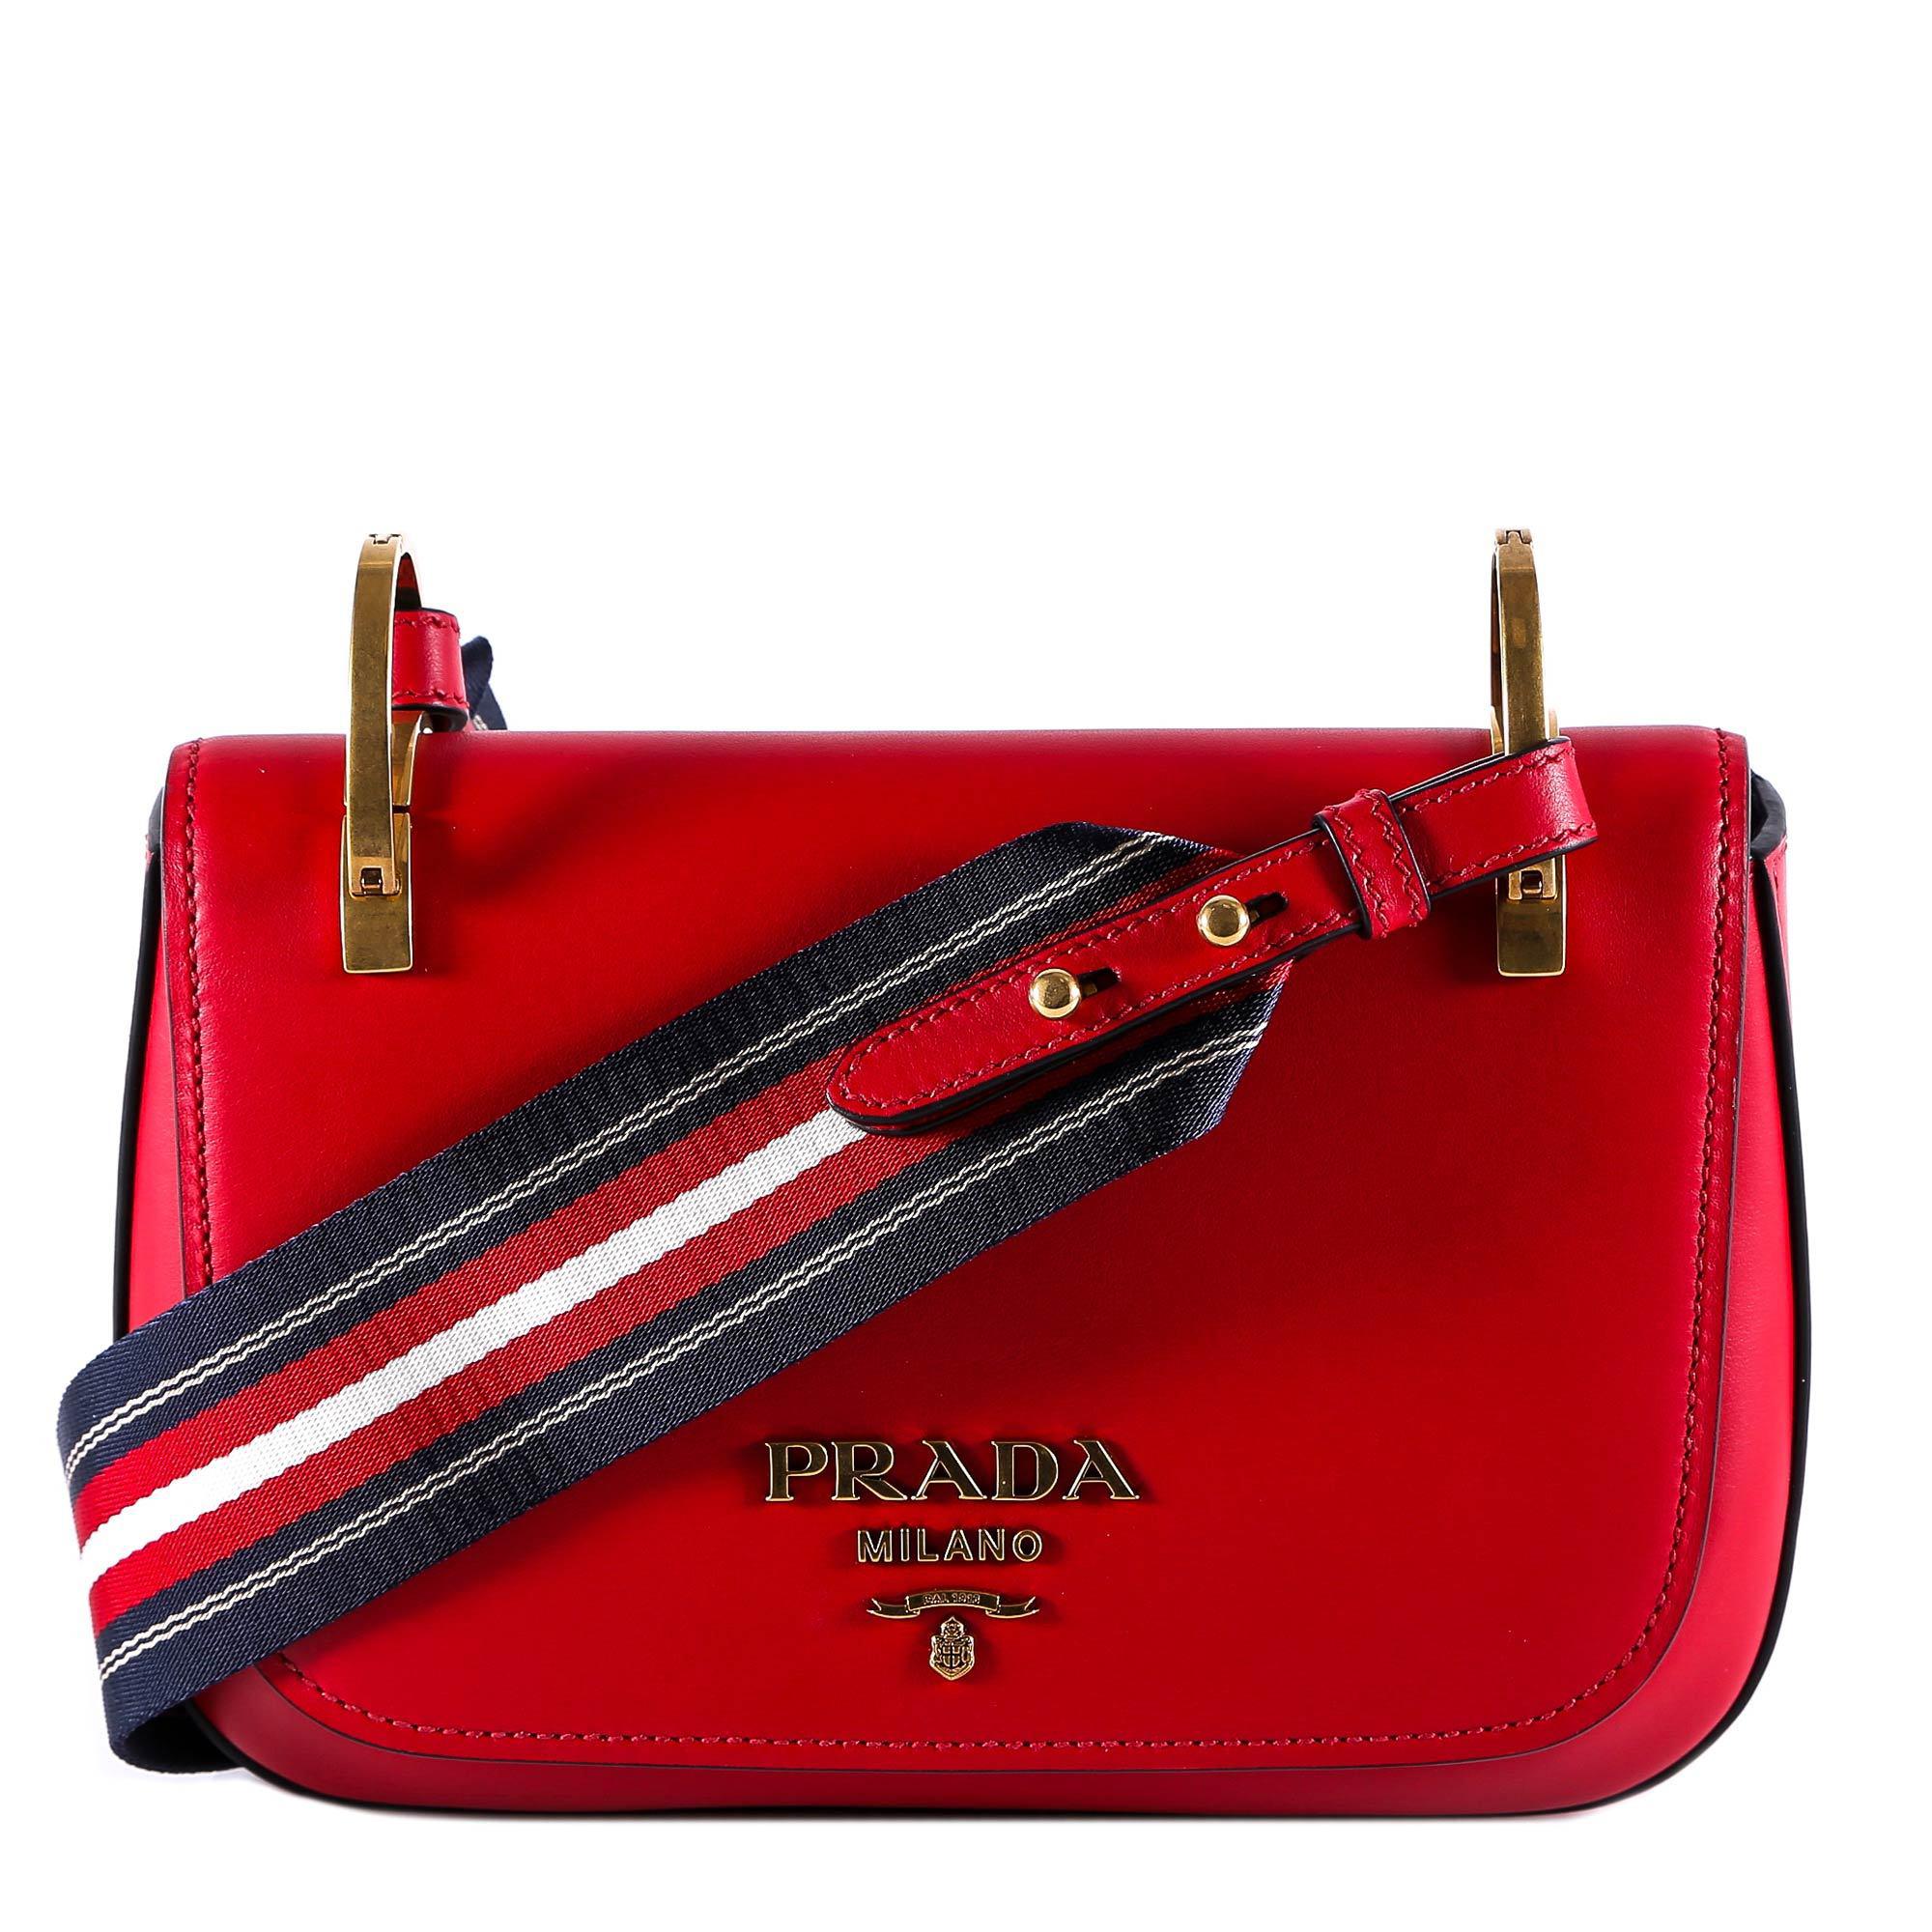 Prada Leather Striped Strap Shoulder Bag in Red - Lyst